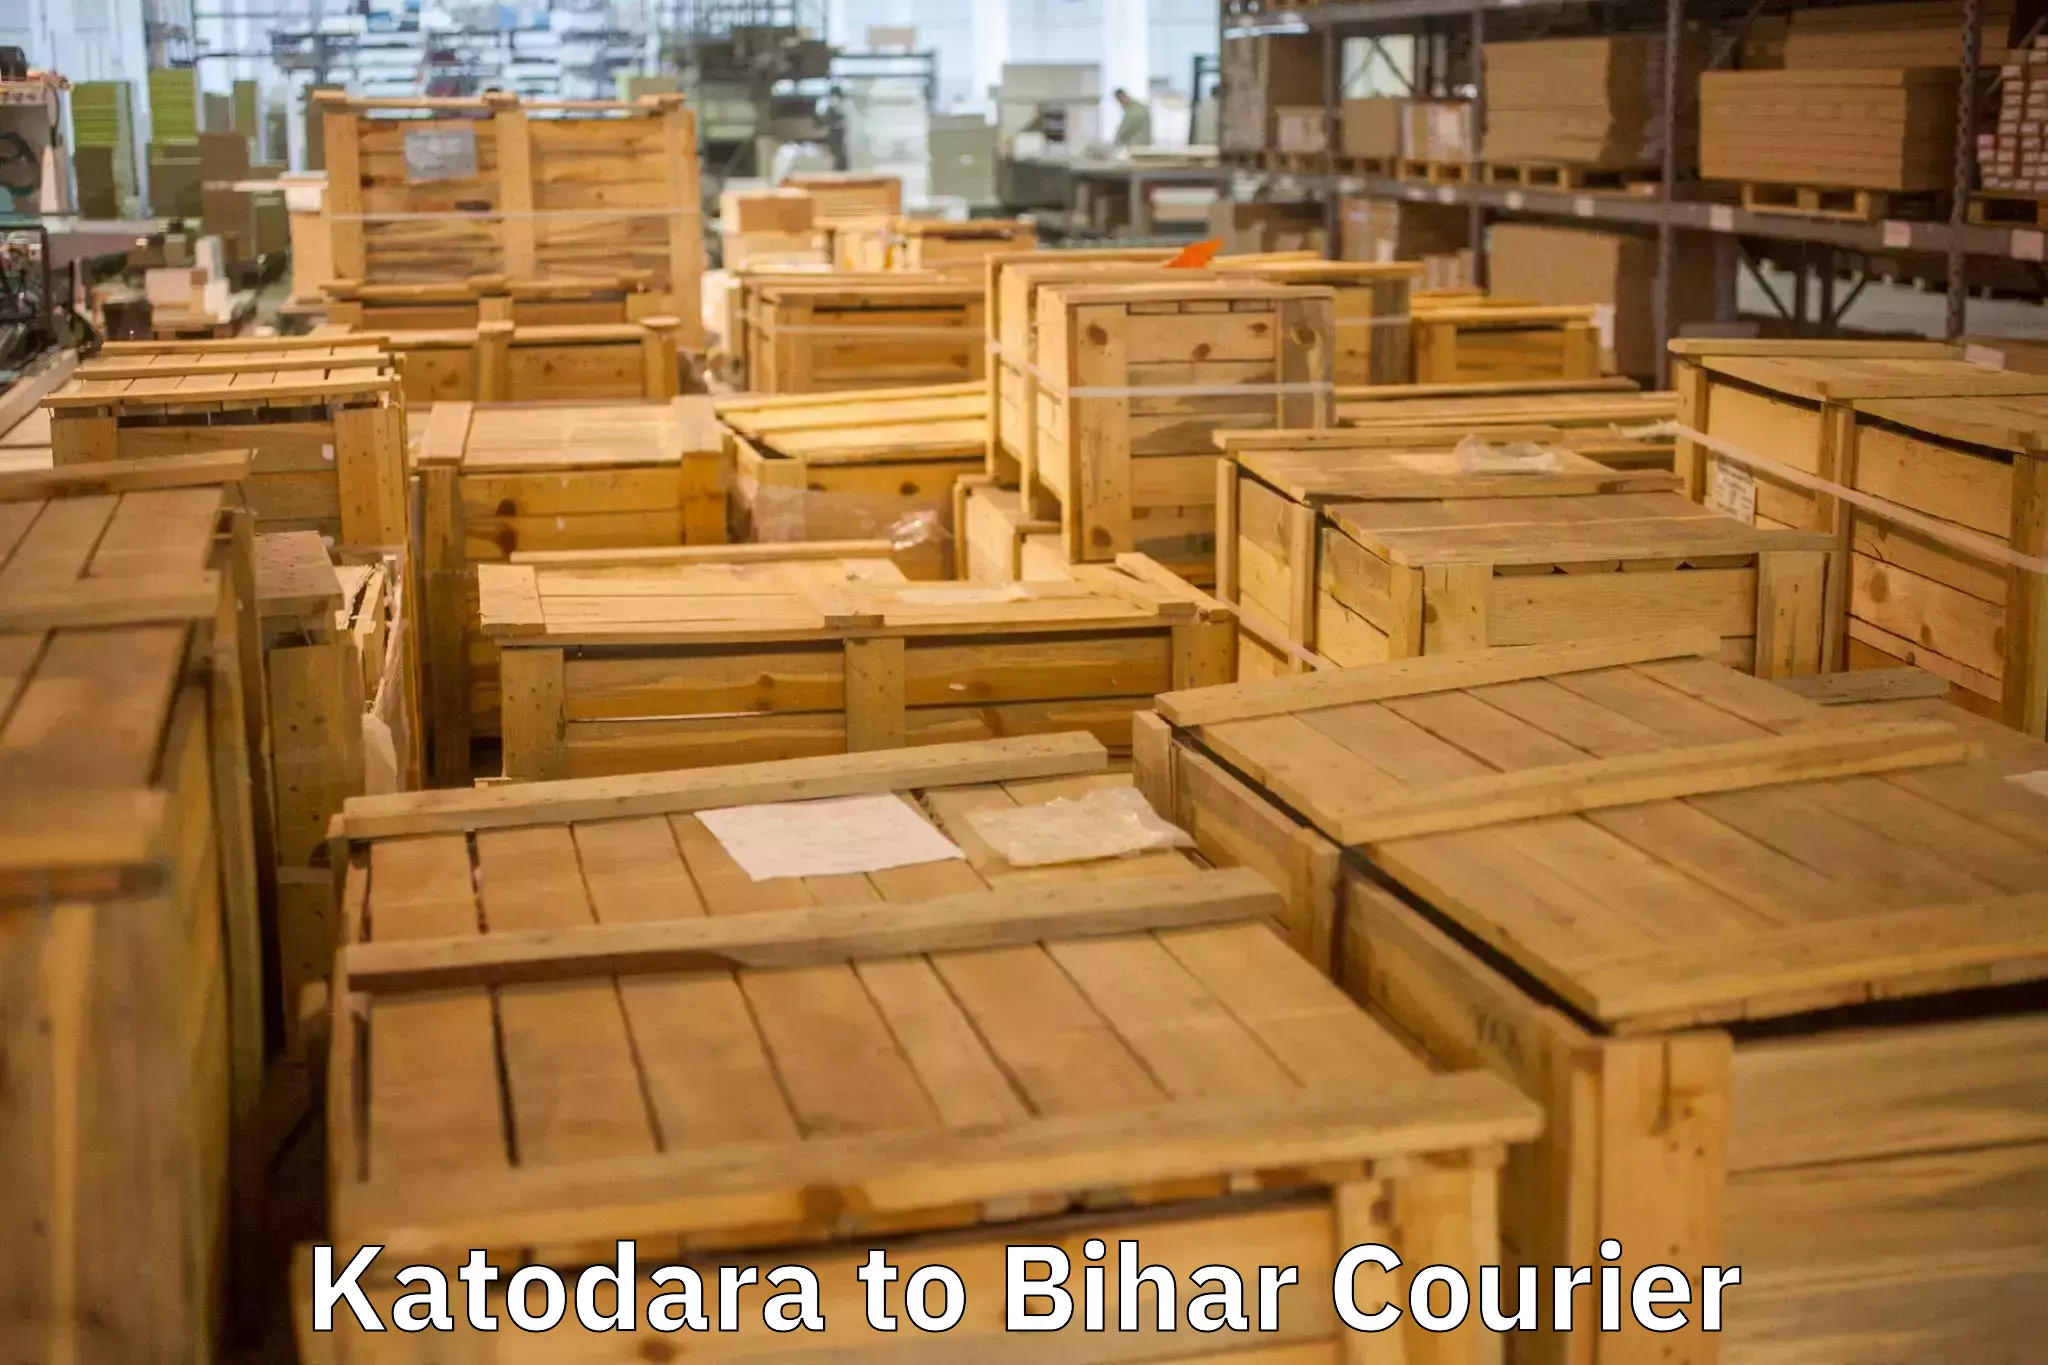 Budget-friendly movers Katodara to Dhaka